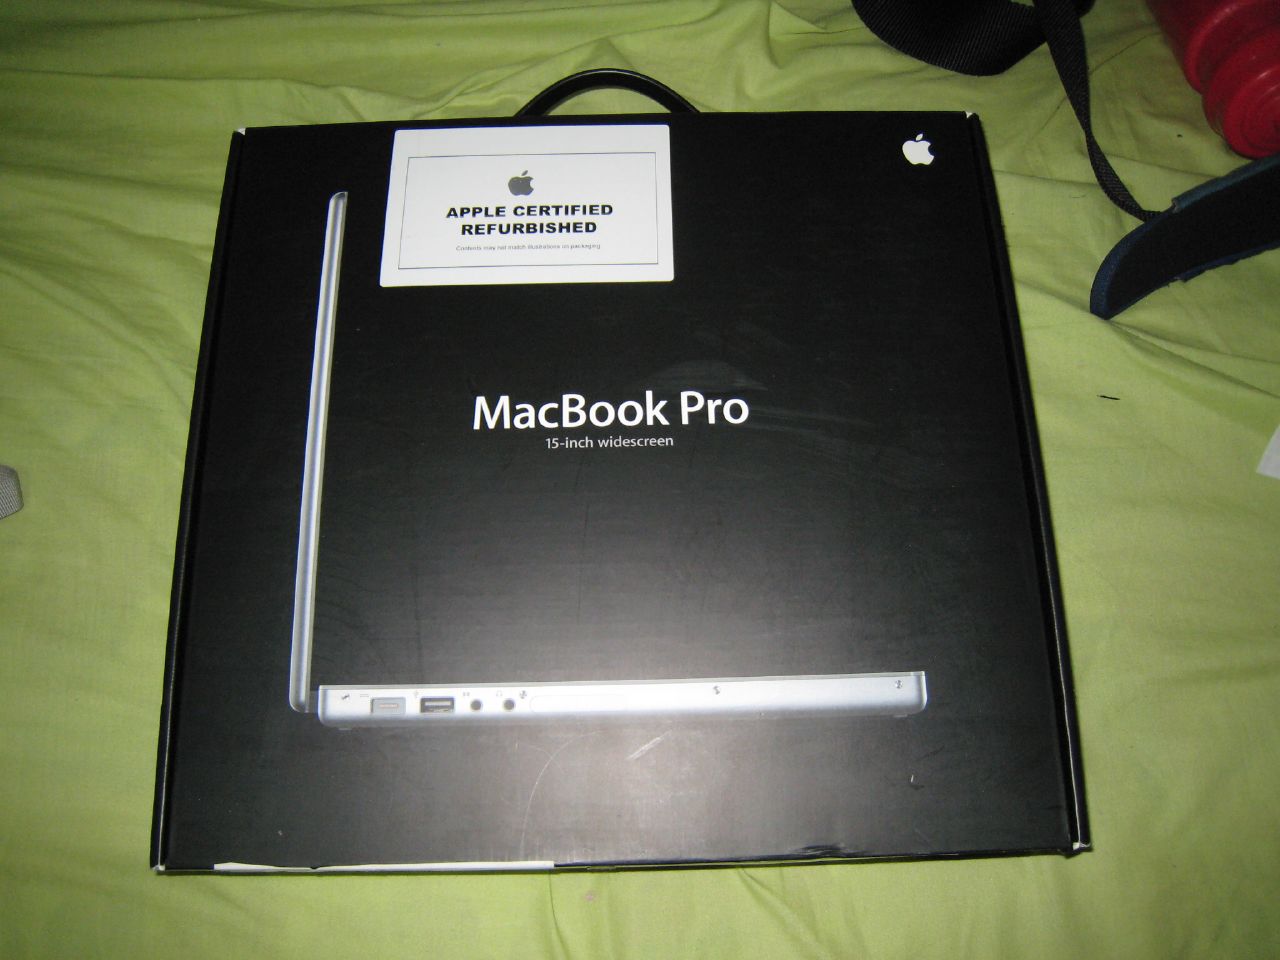 macbook pro box front